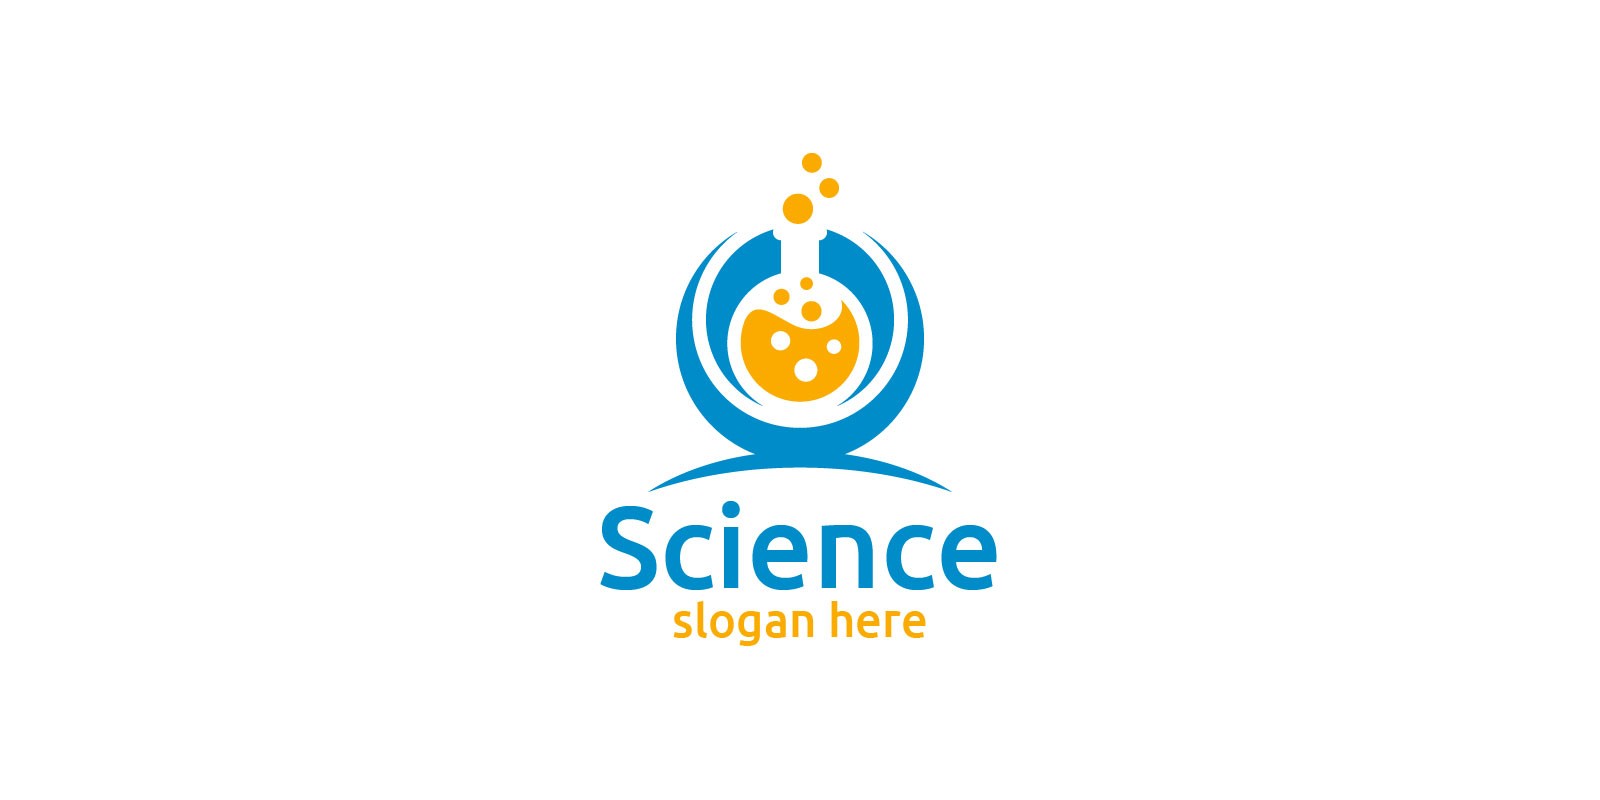 Top more than 85 science lab logo latest - ceg.edu.vn